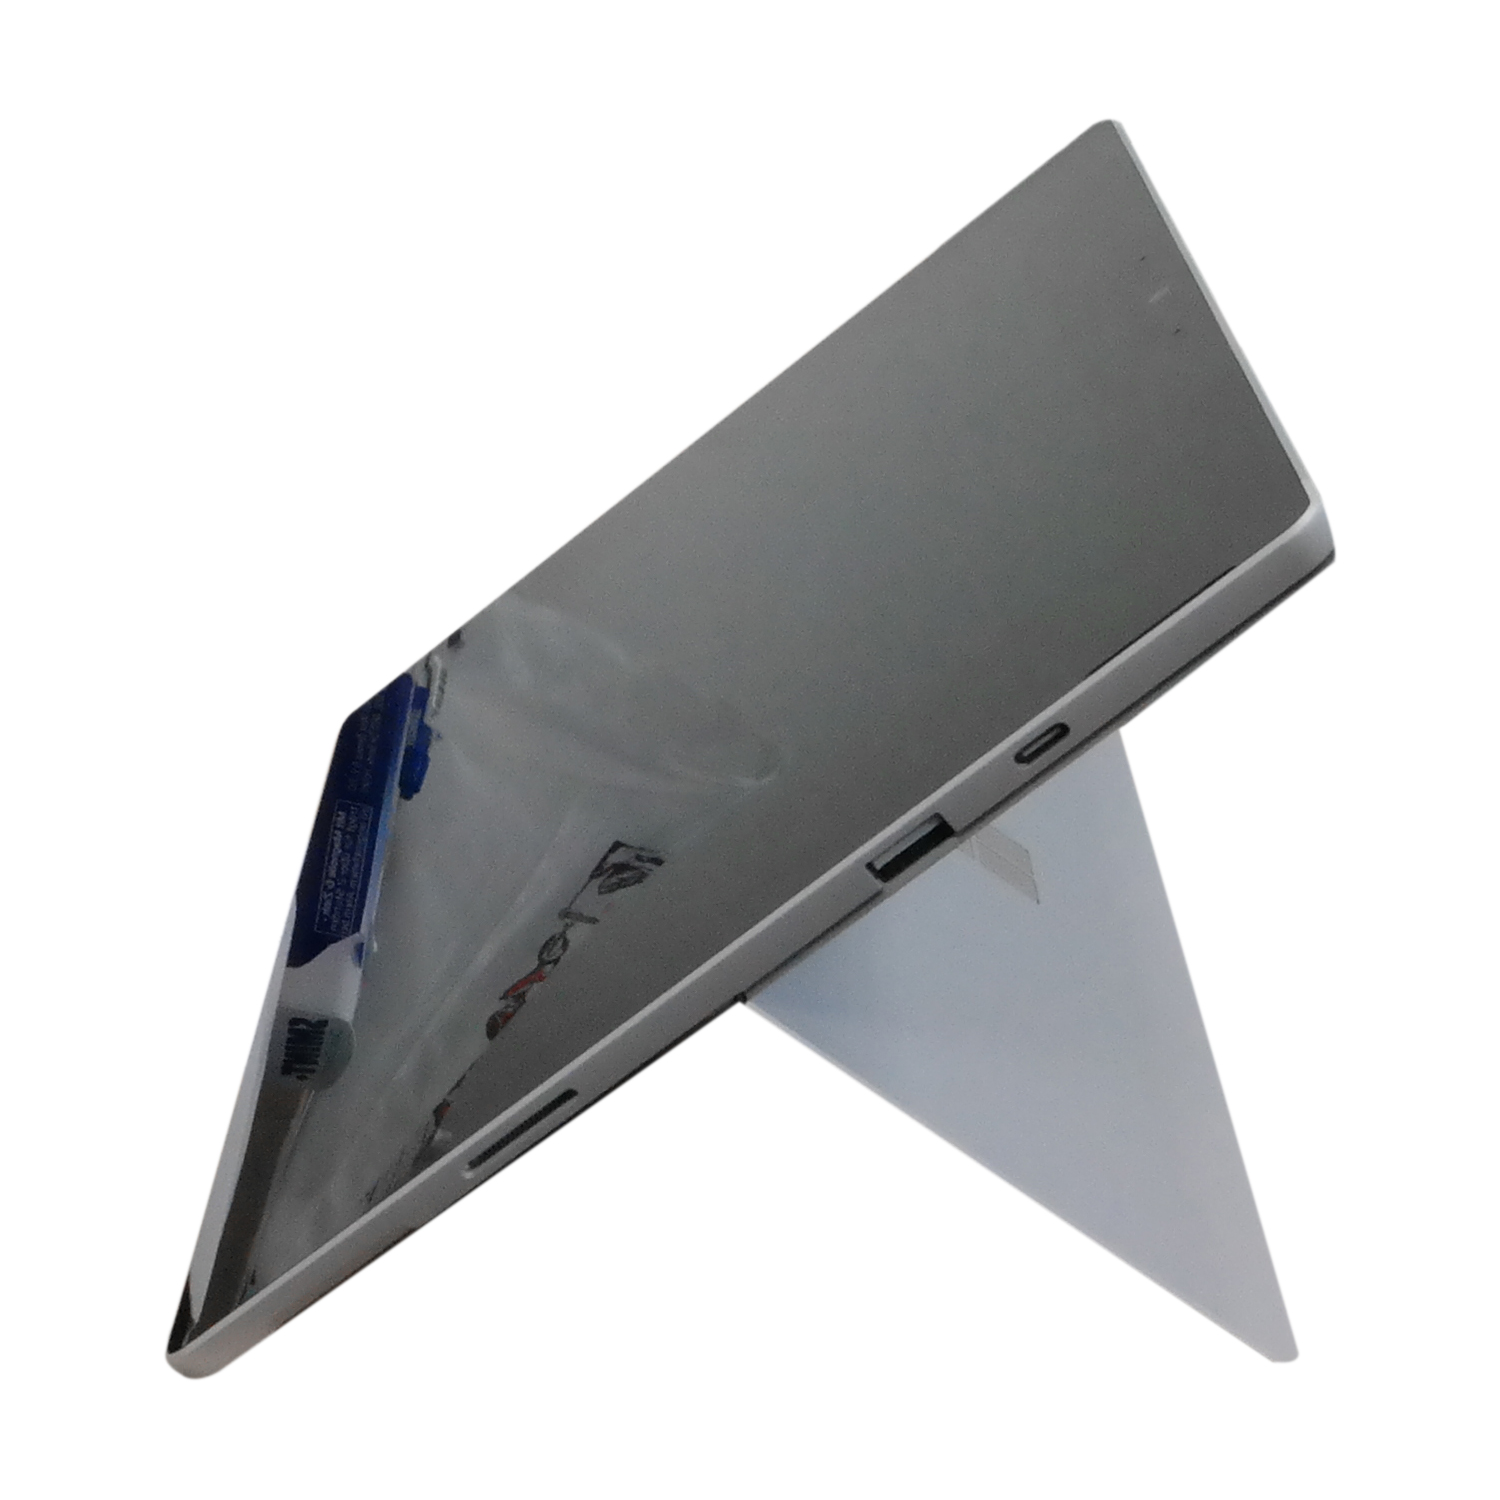 Microsoft Surface Pro 7 128GB/8GB 12,3 Zoll mit i5 Prozessor Convertible Laptop Tablet - platin